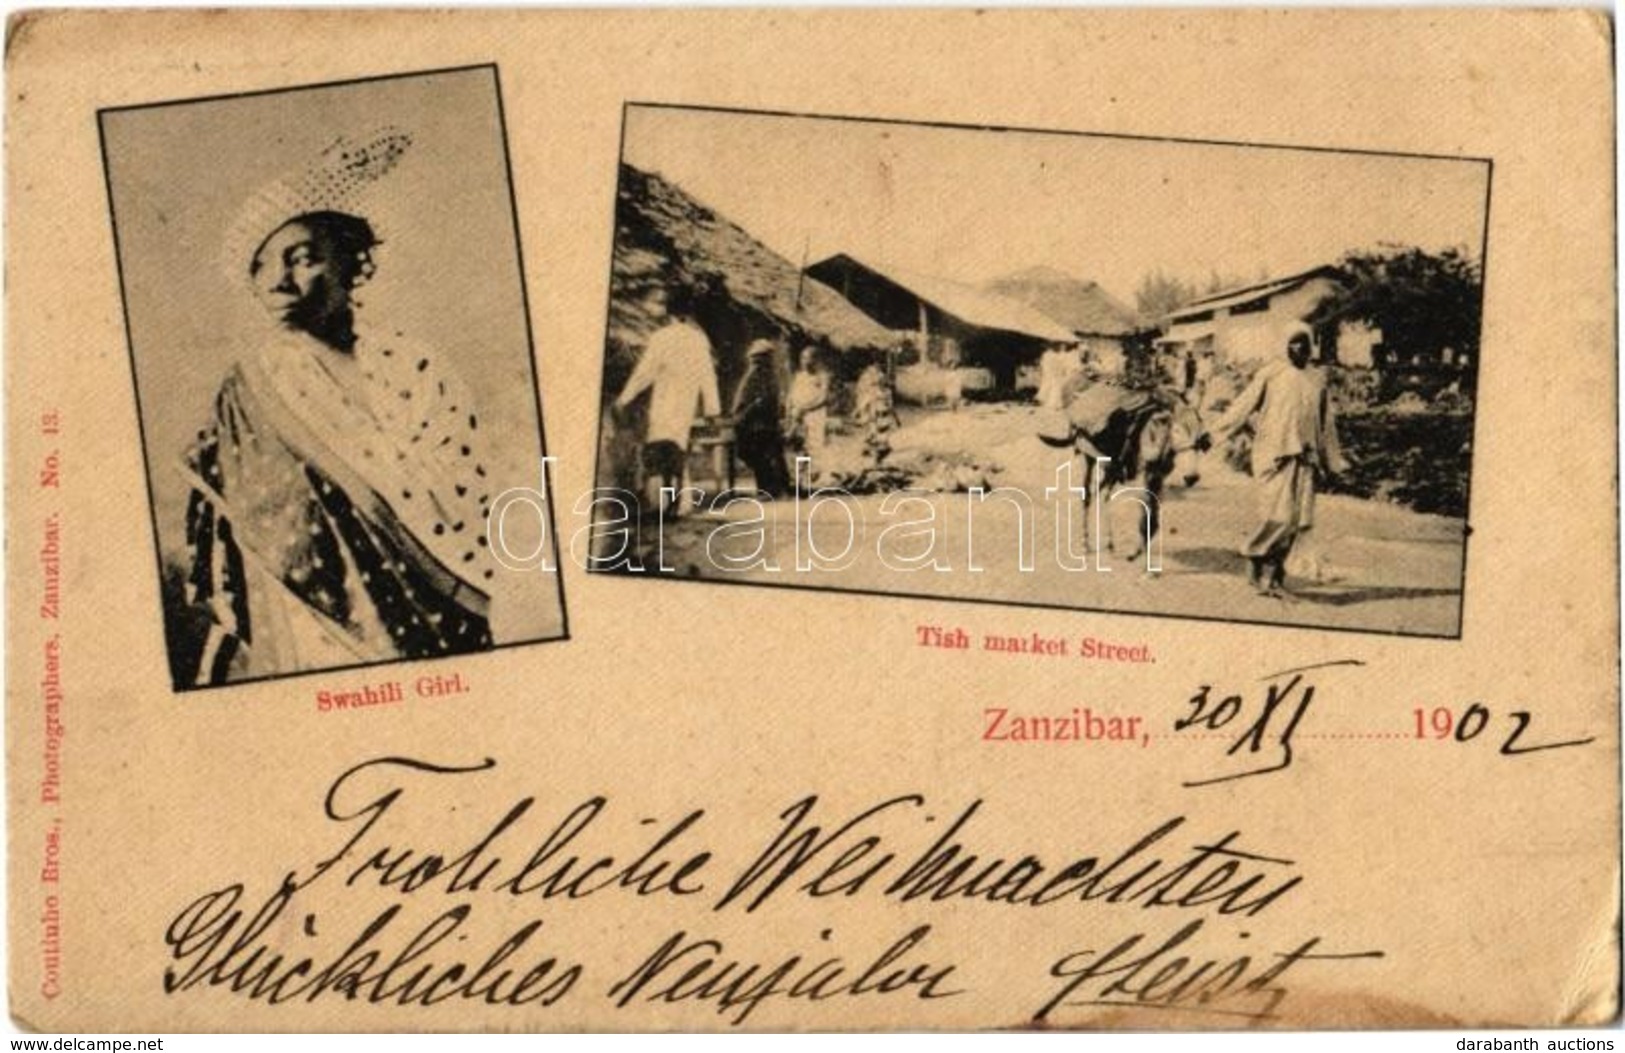 T2/T3 1902 Zanzibar, Swahili Girl, Fish Market Street, Vendors, Folklore. Coutinho Bros. Photographers No. 13. (EK) - Unclassified